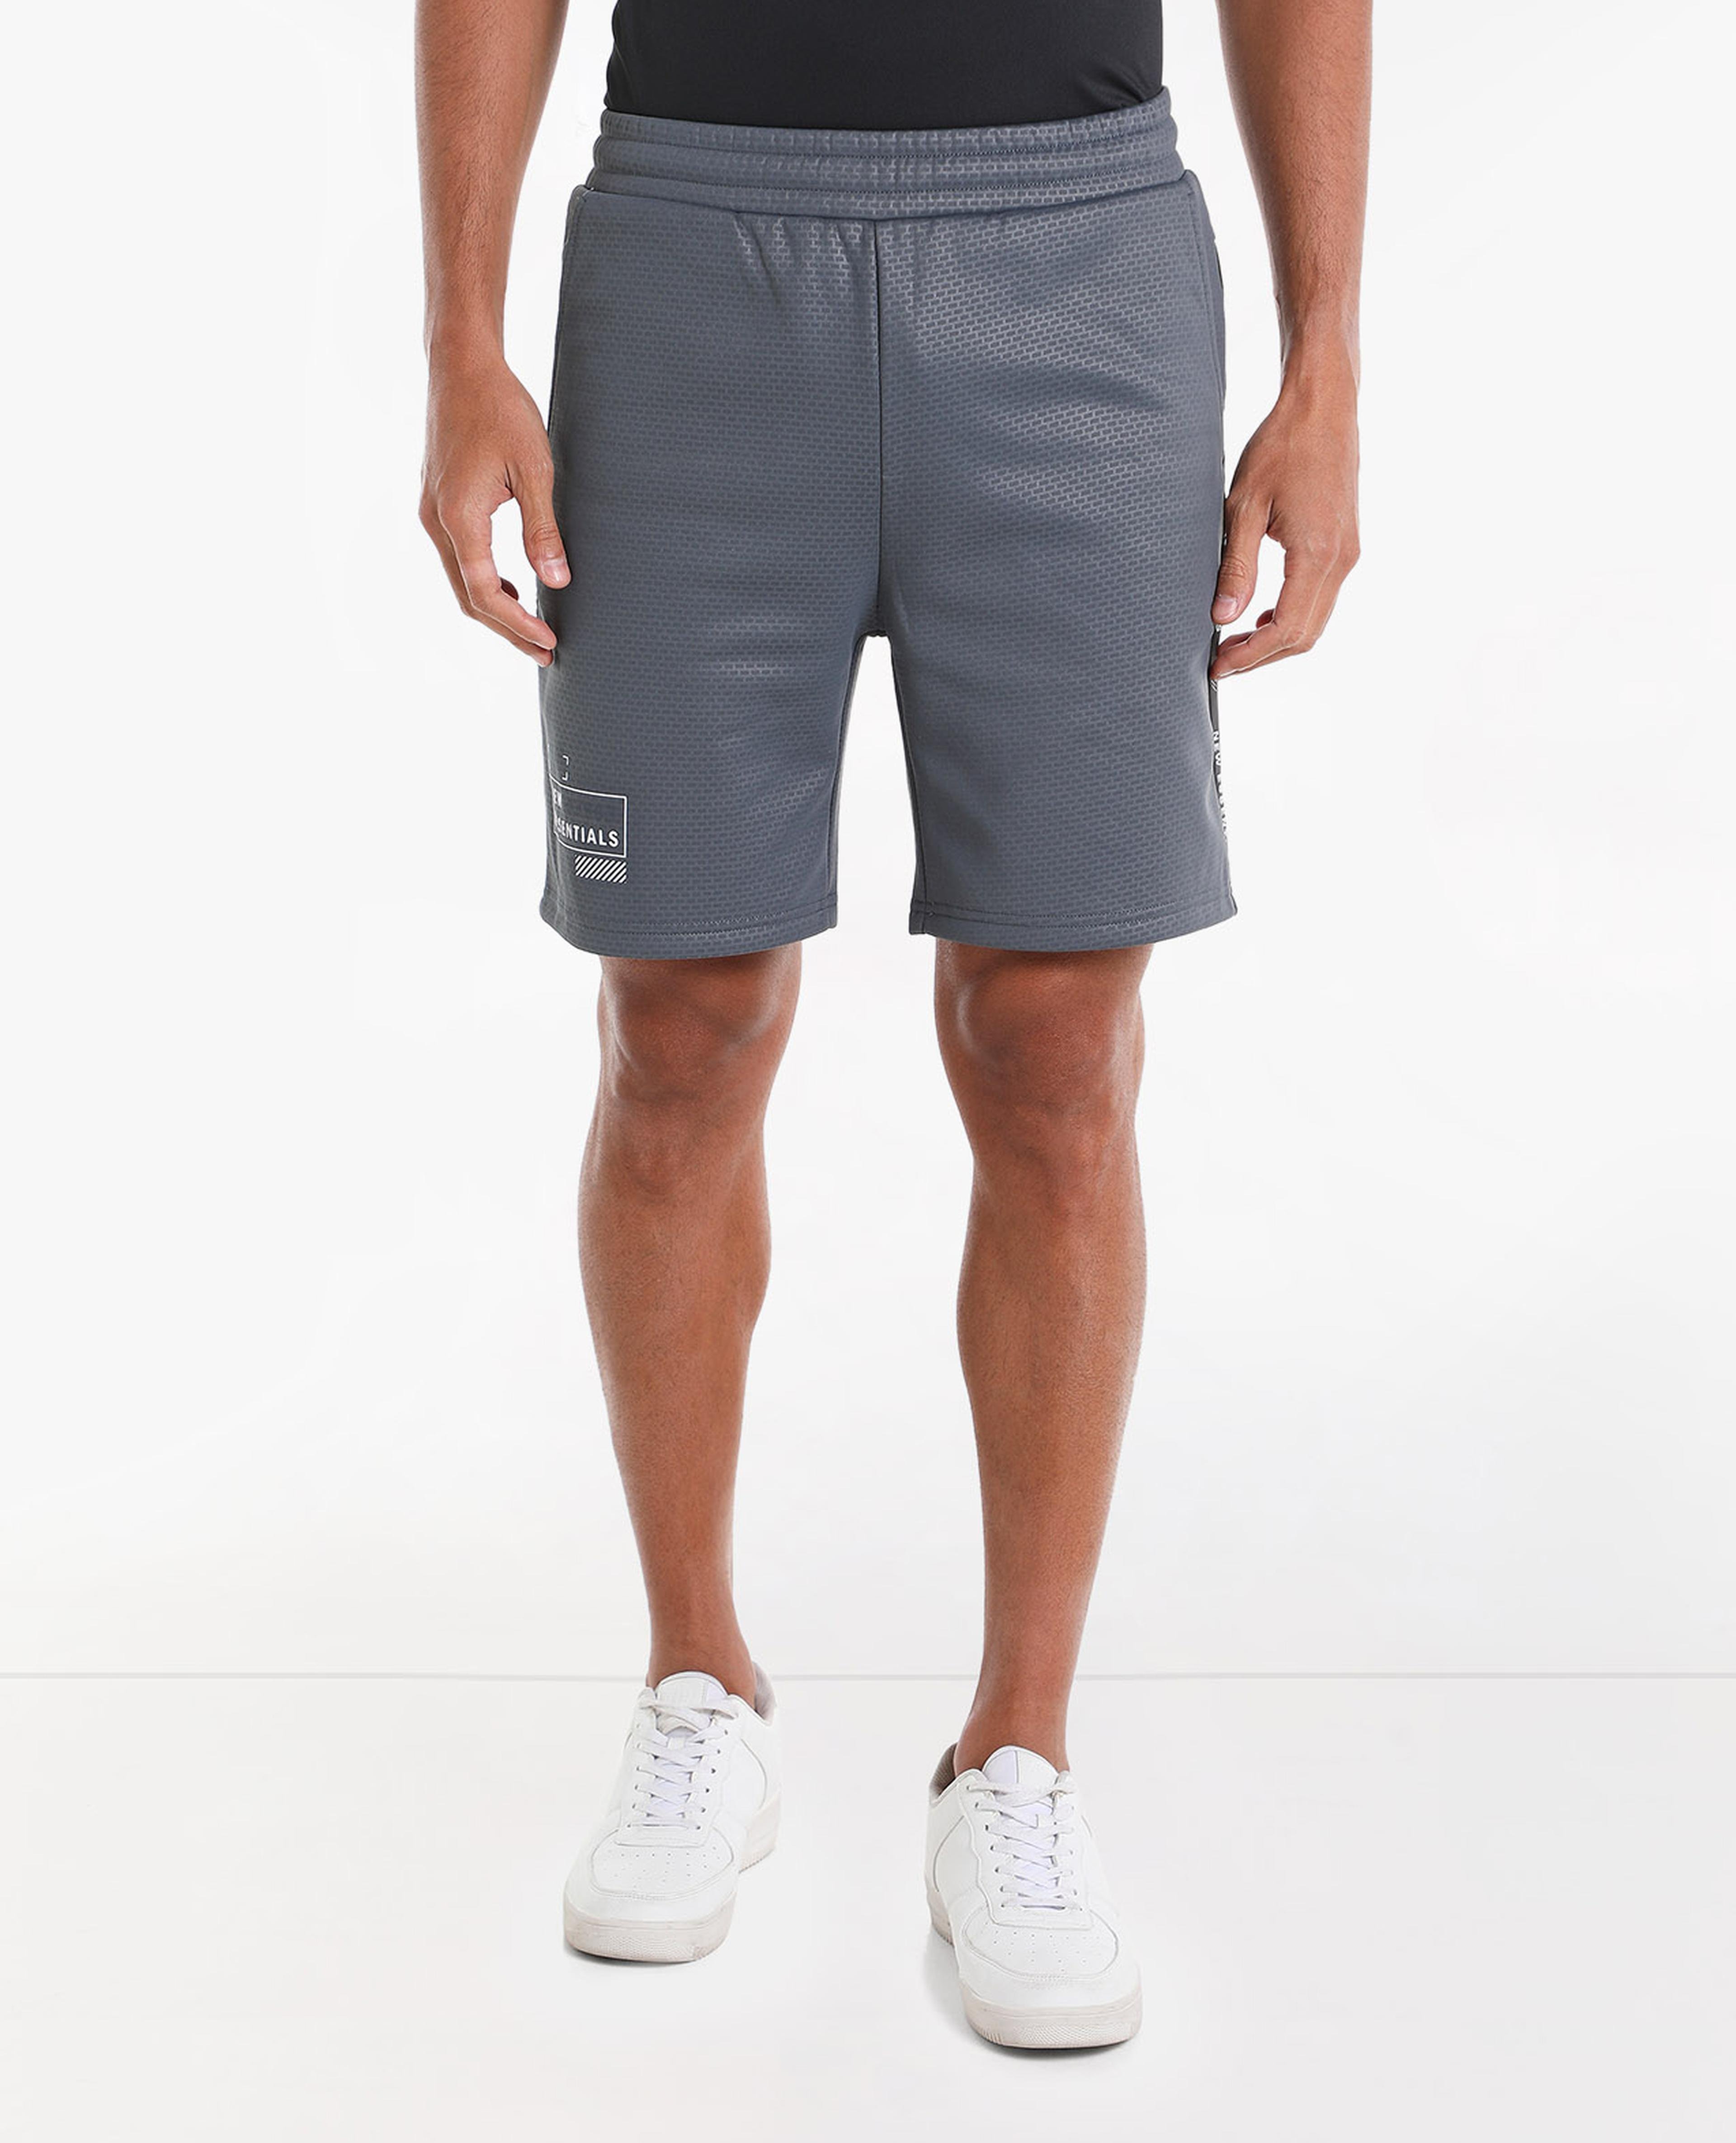 Solid Shorts with Drawstring Closure